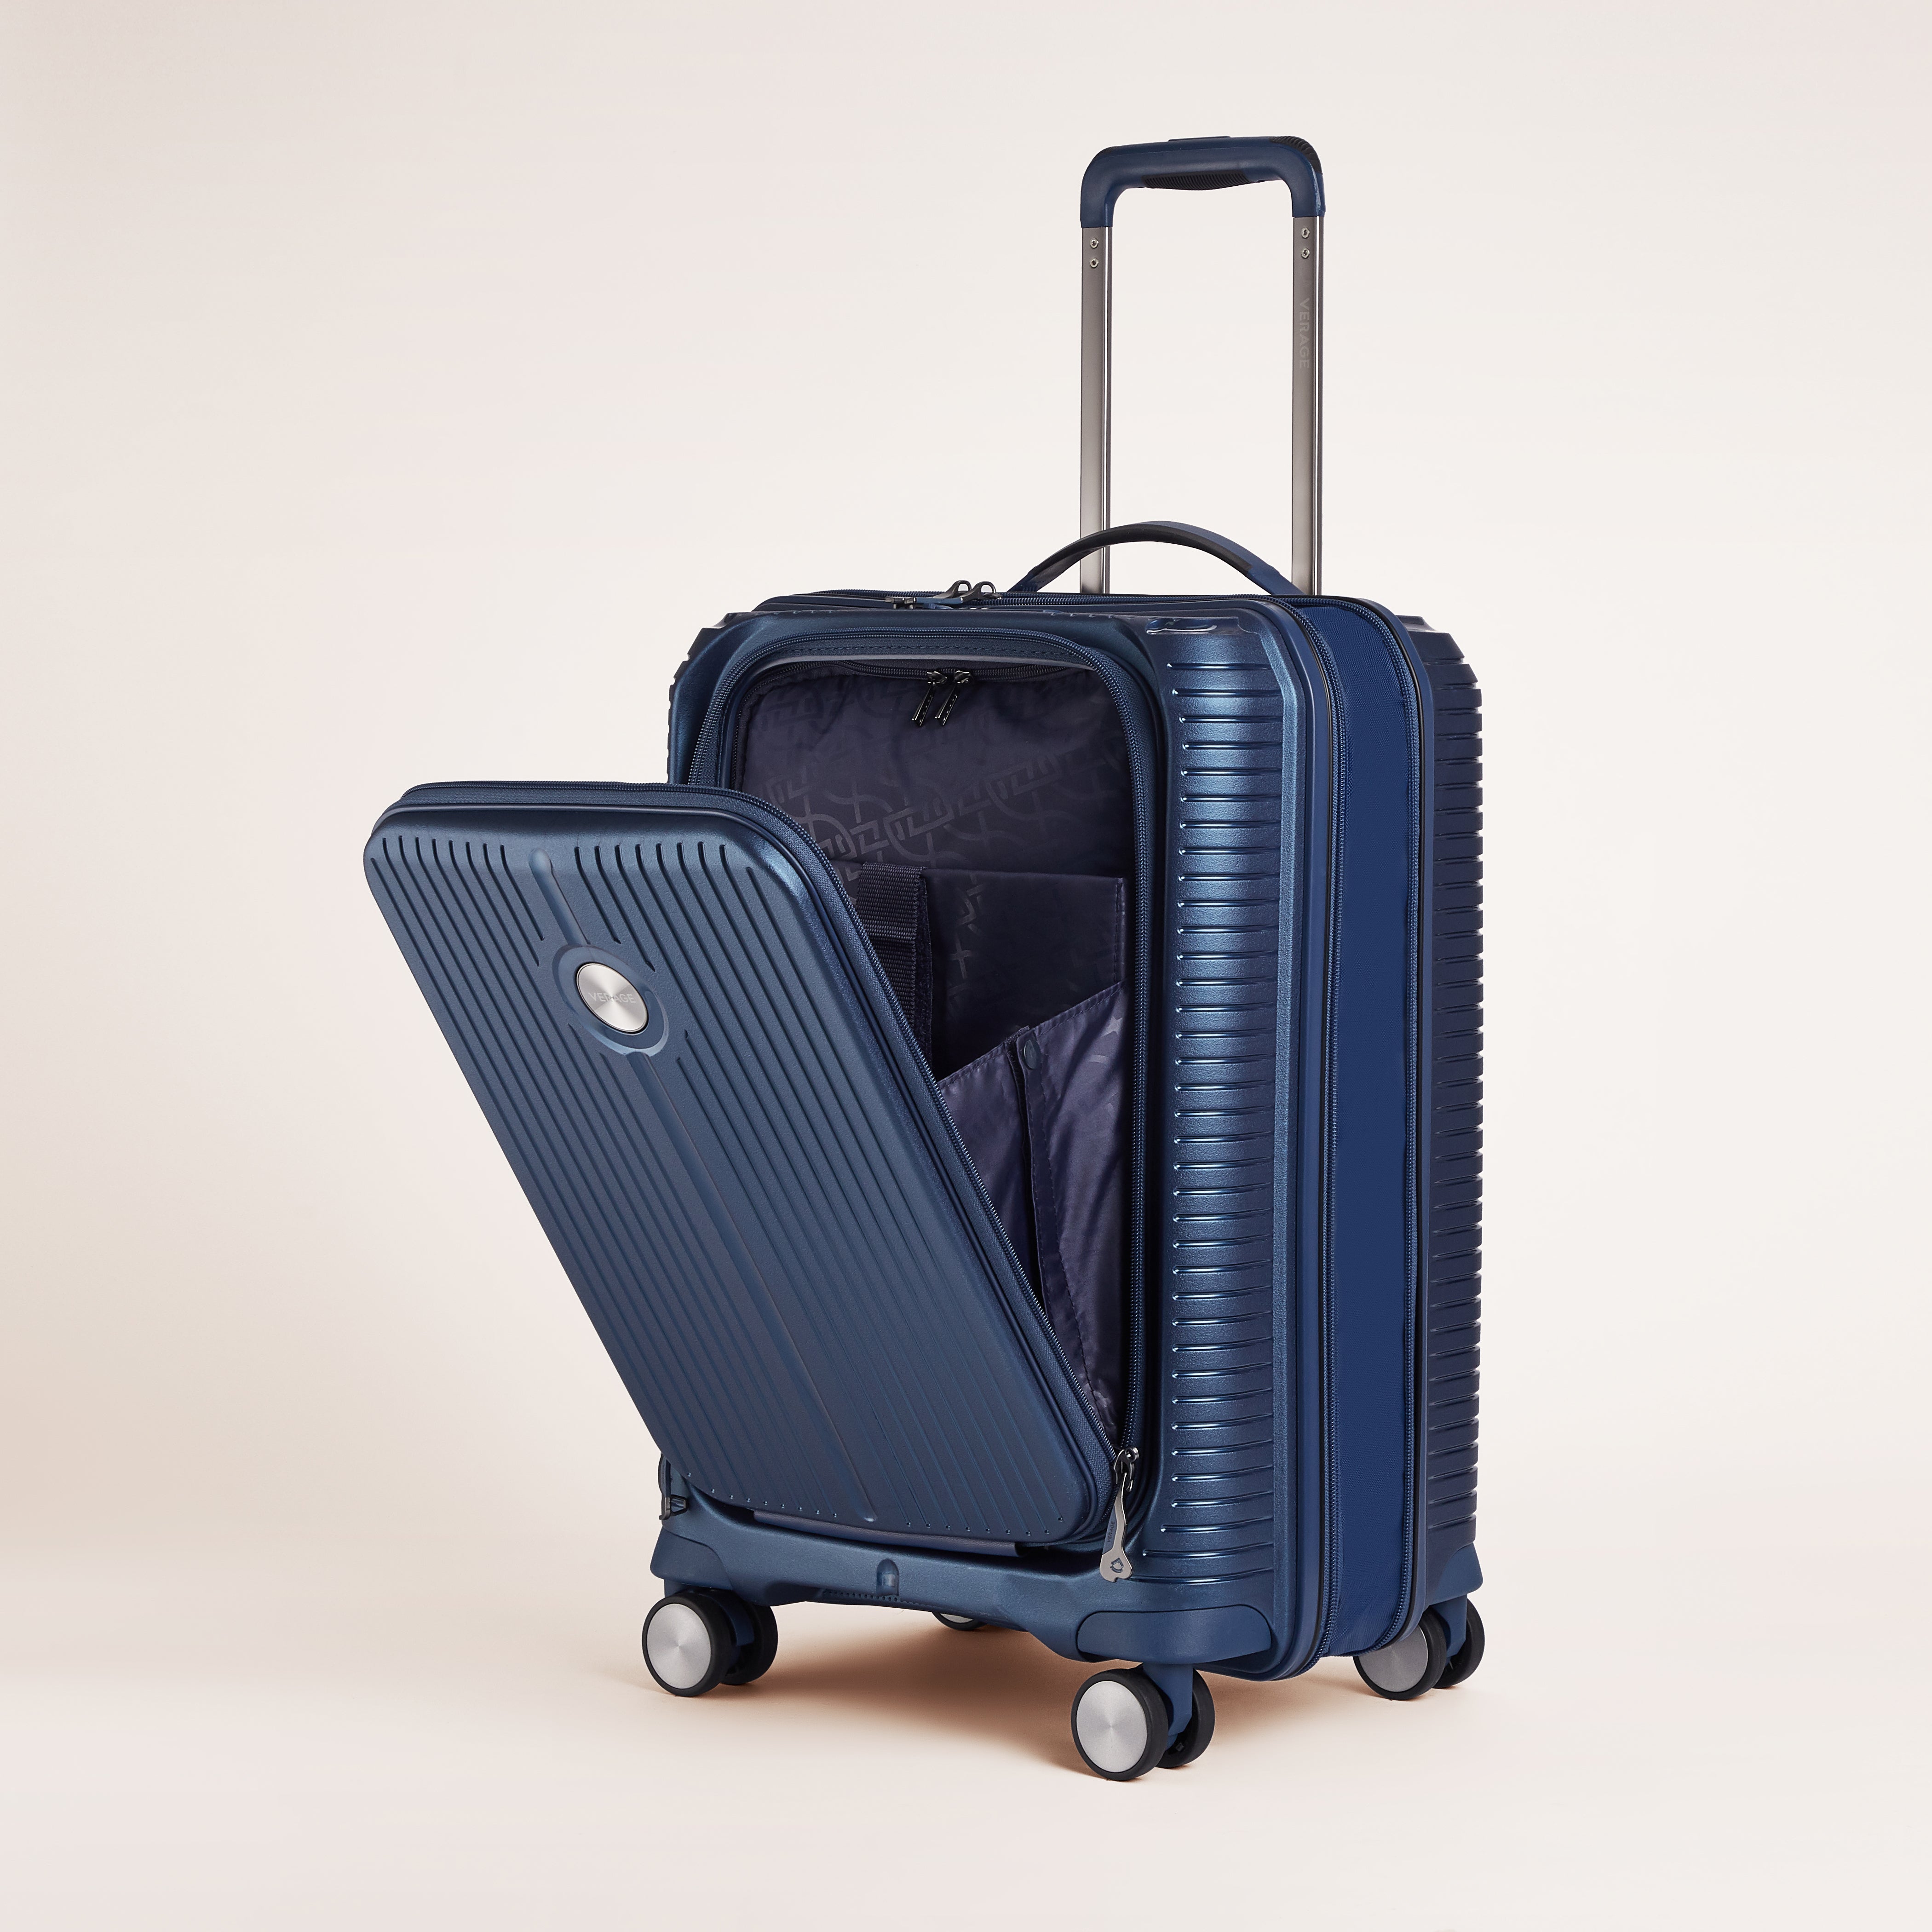 Rome Monti - The Tech Pack Laptop Trolley Bag